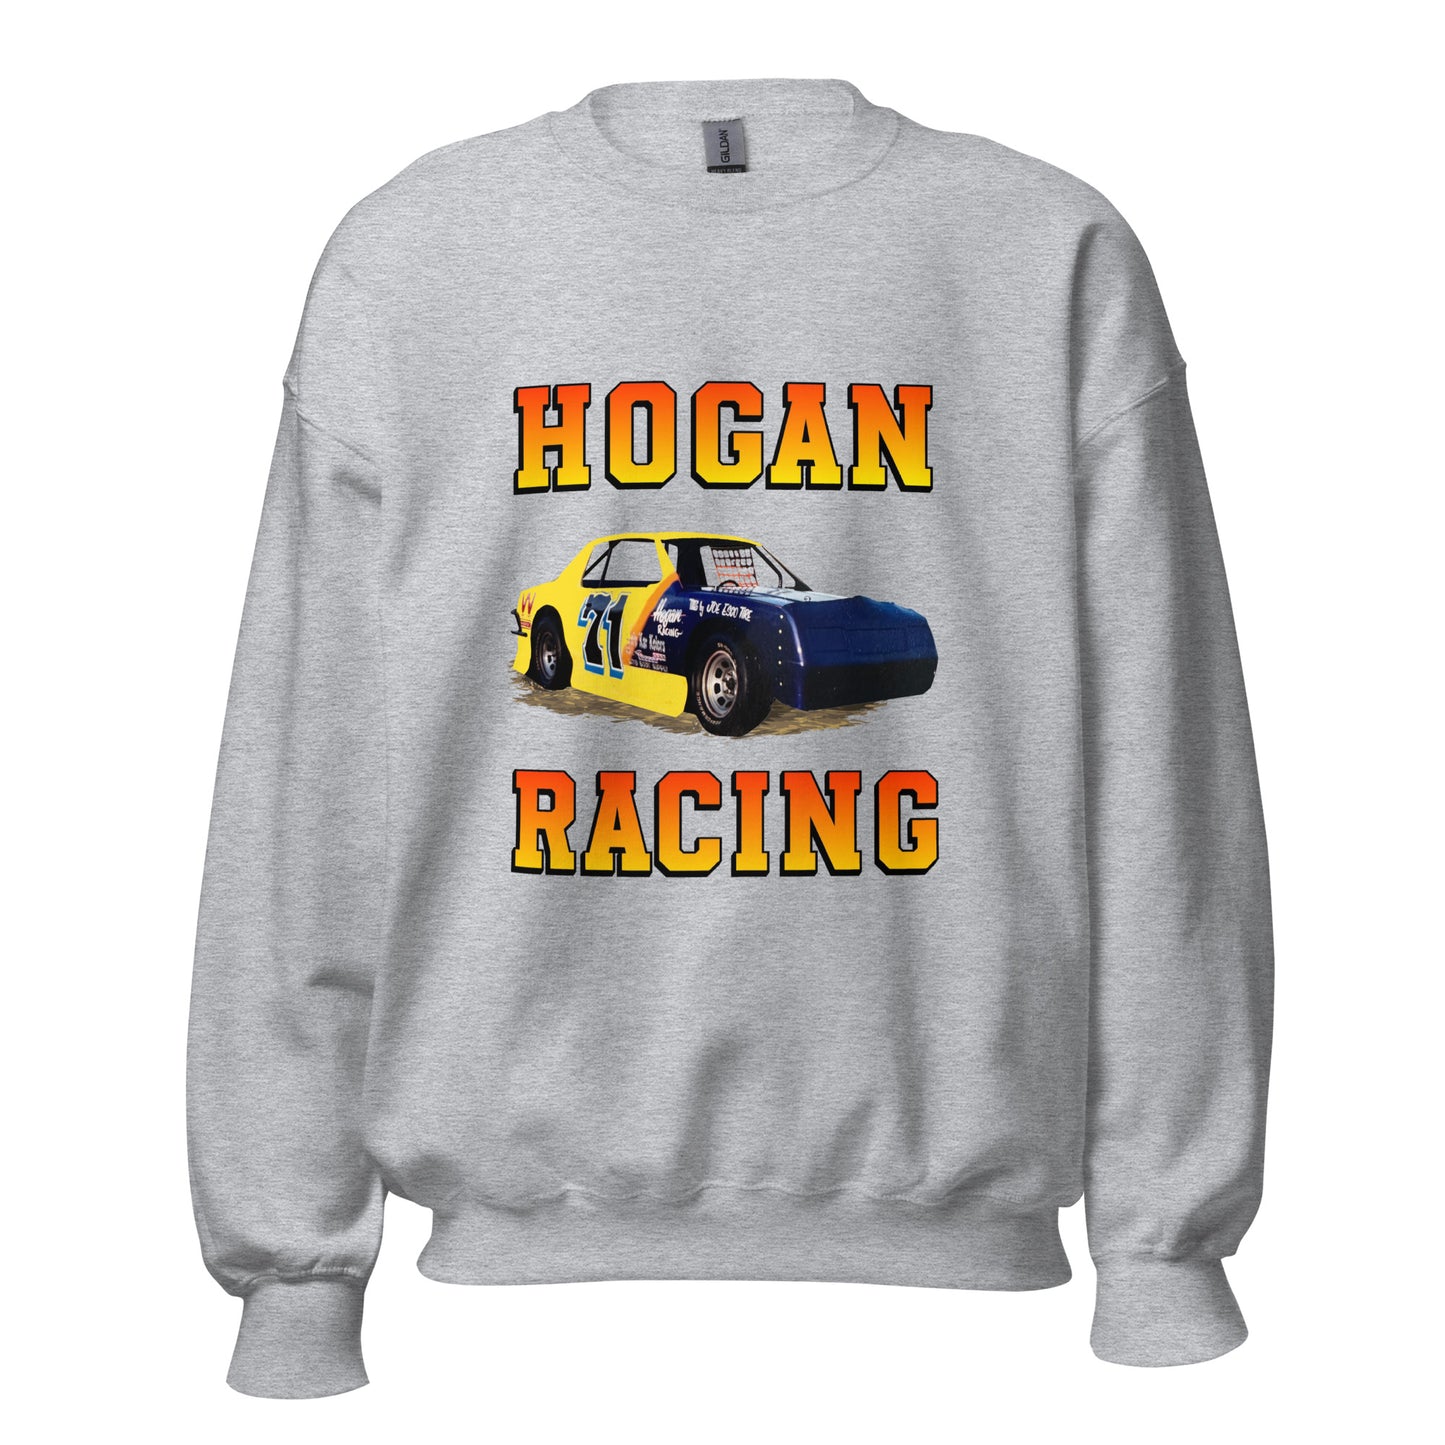 Hogan Racing Adult Crew Sweatshirt